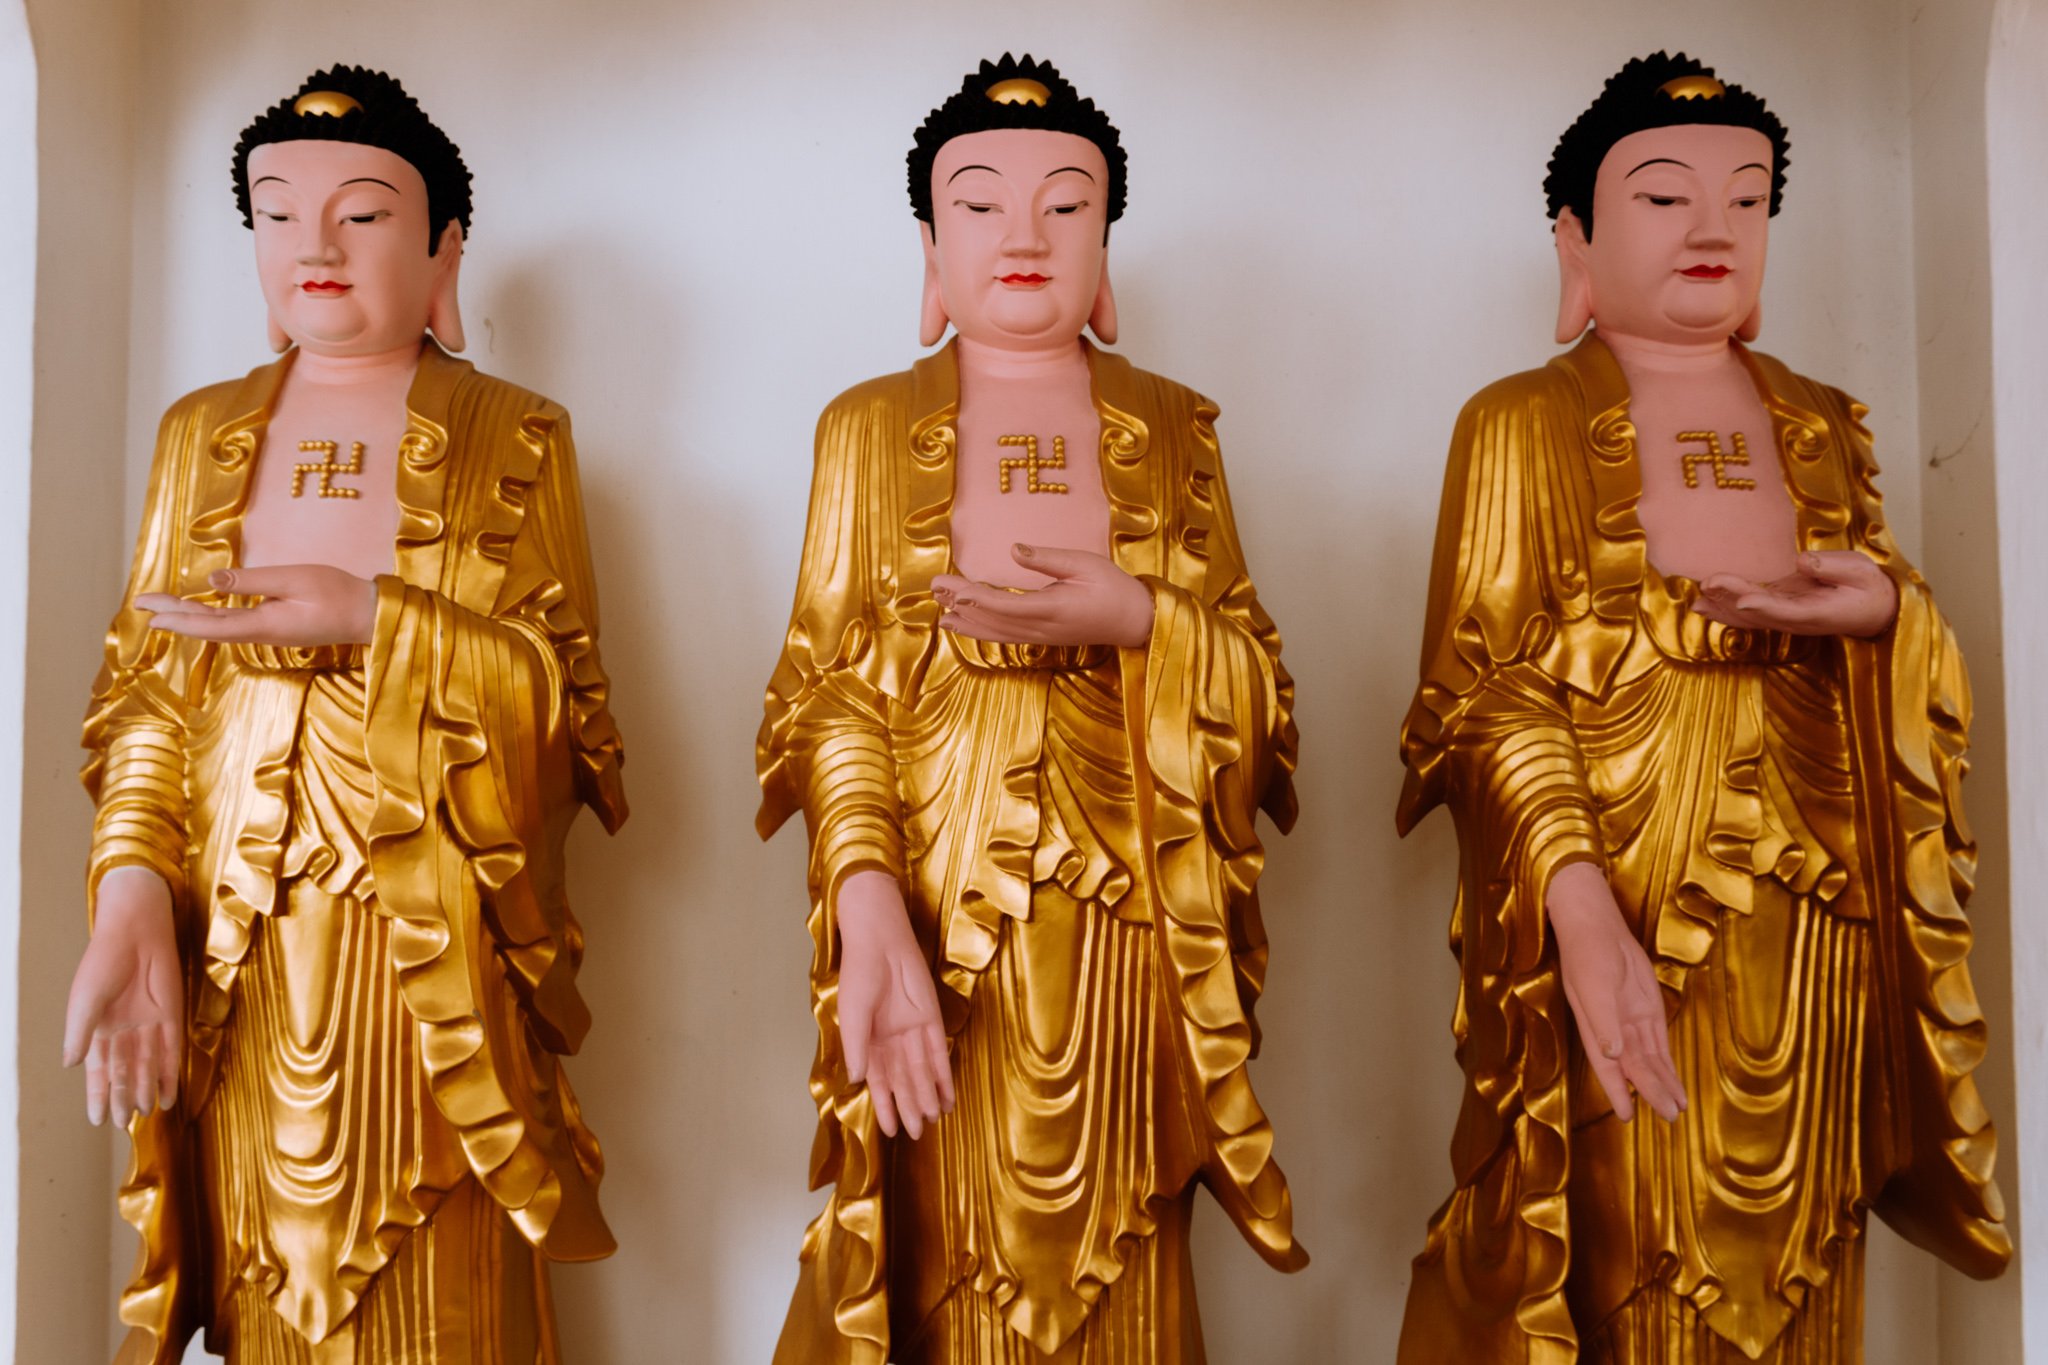 Buddha statues at Kek Lok Si Temple in Penang, Malaysia